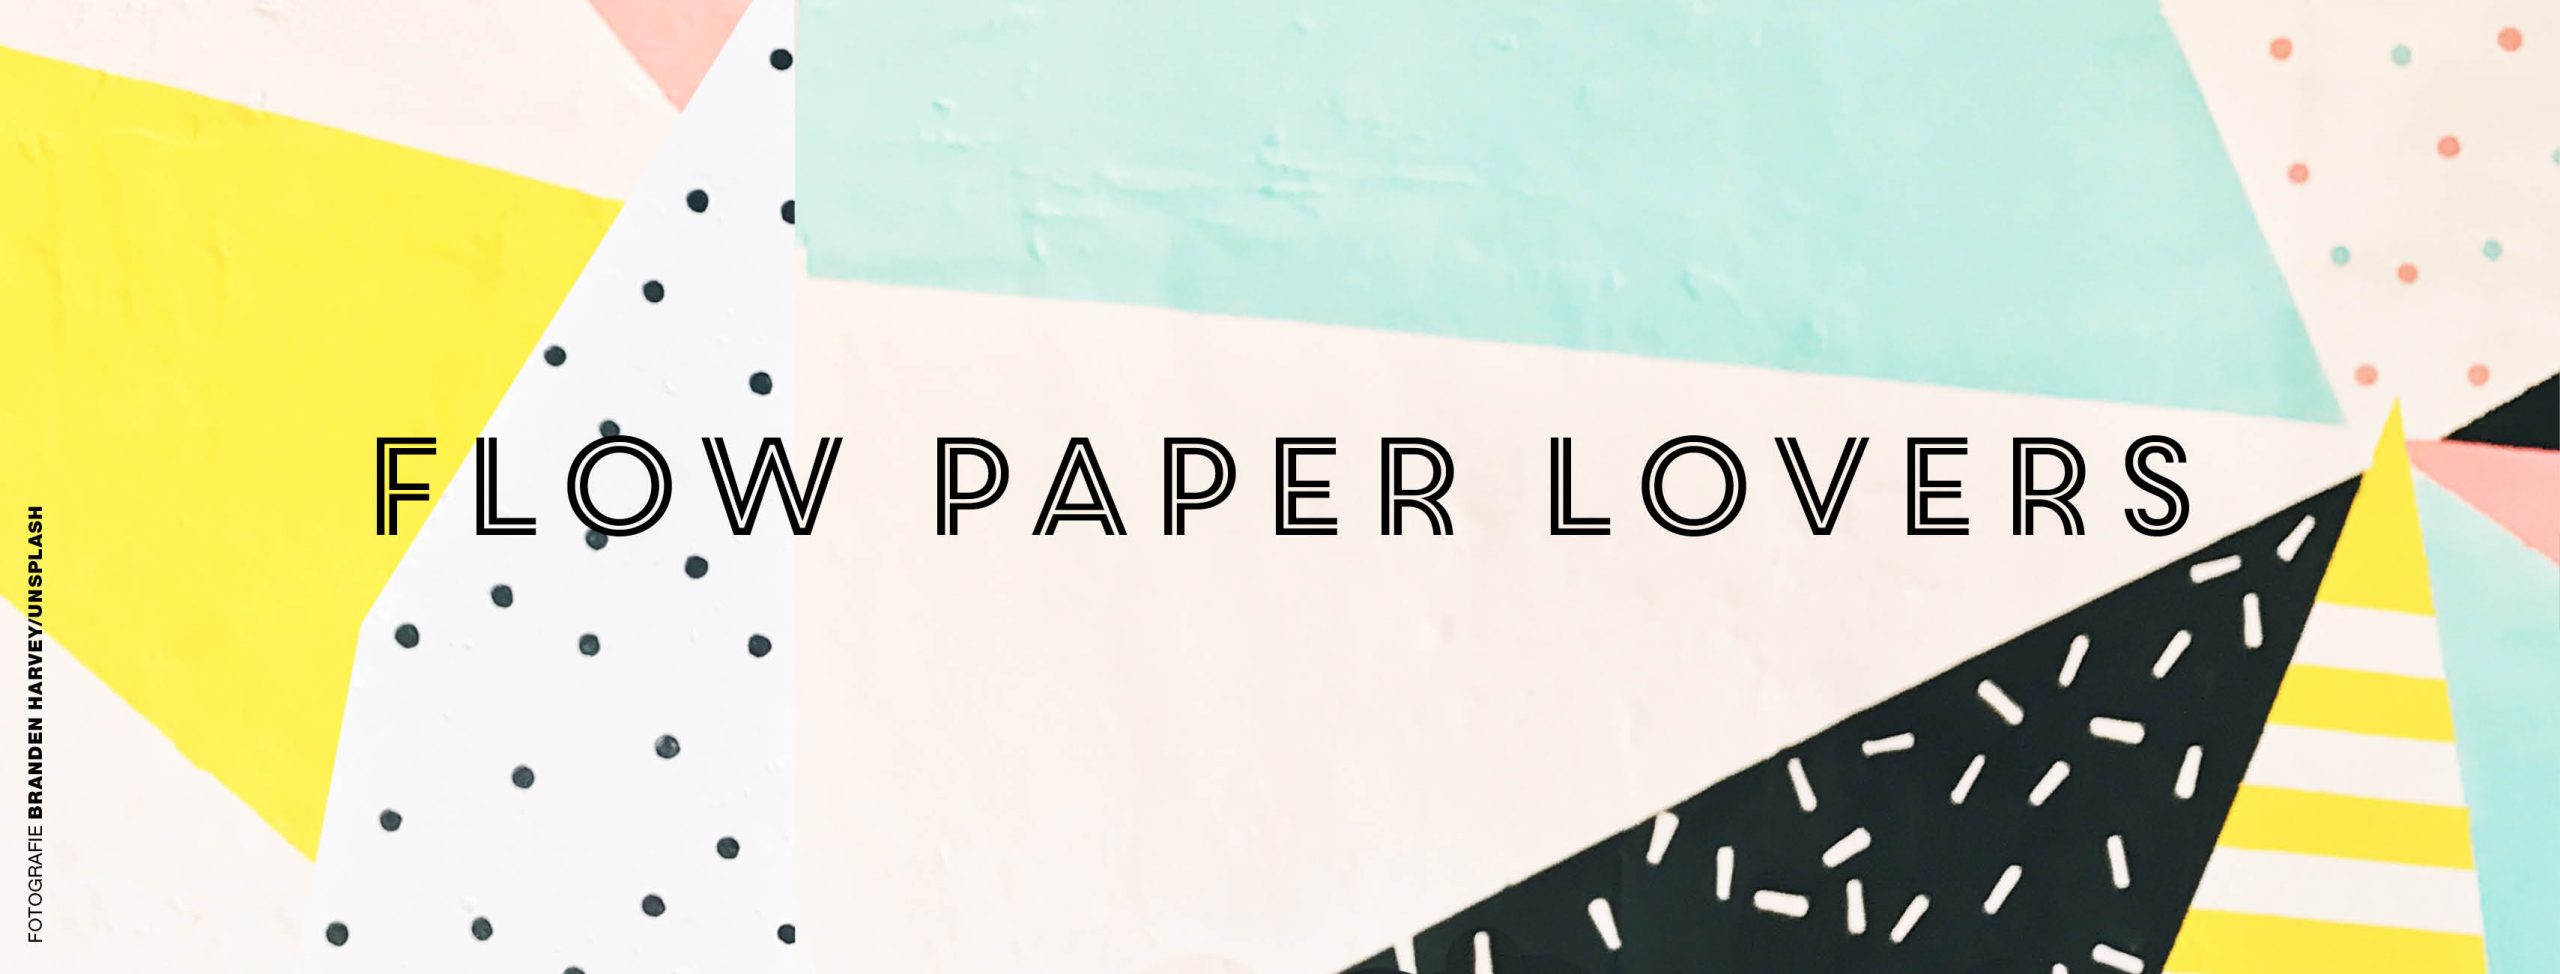 Flow paper lovers